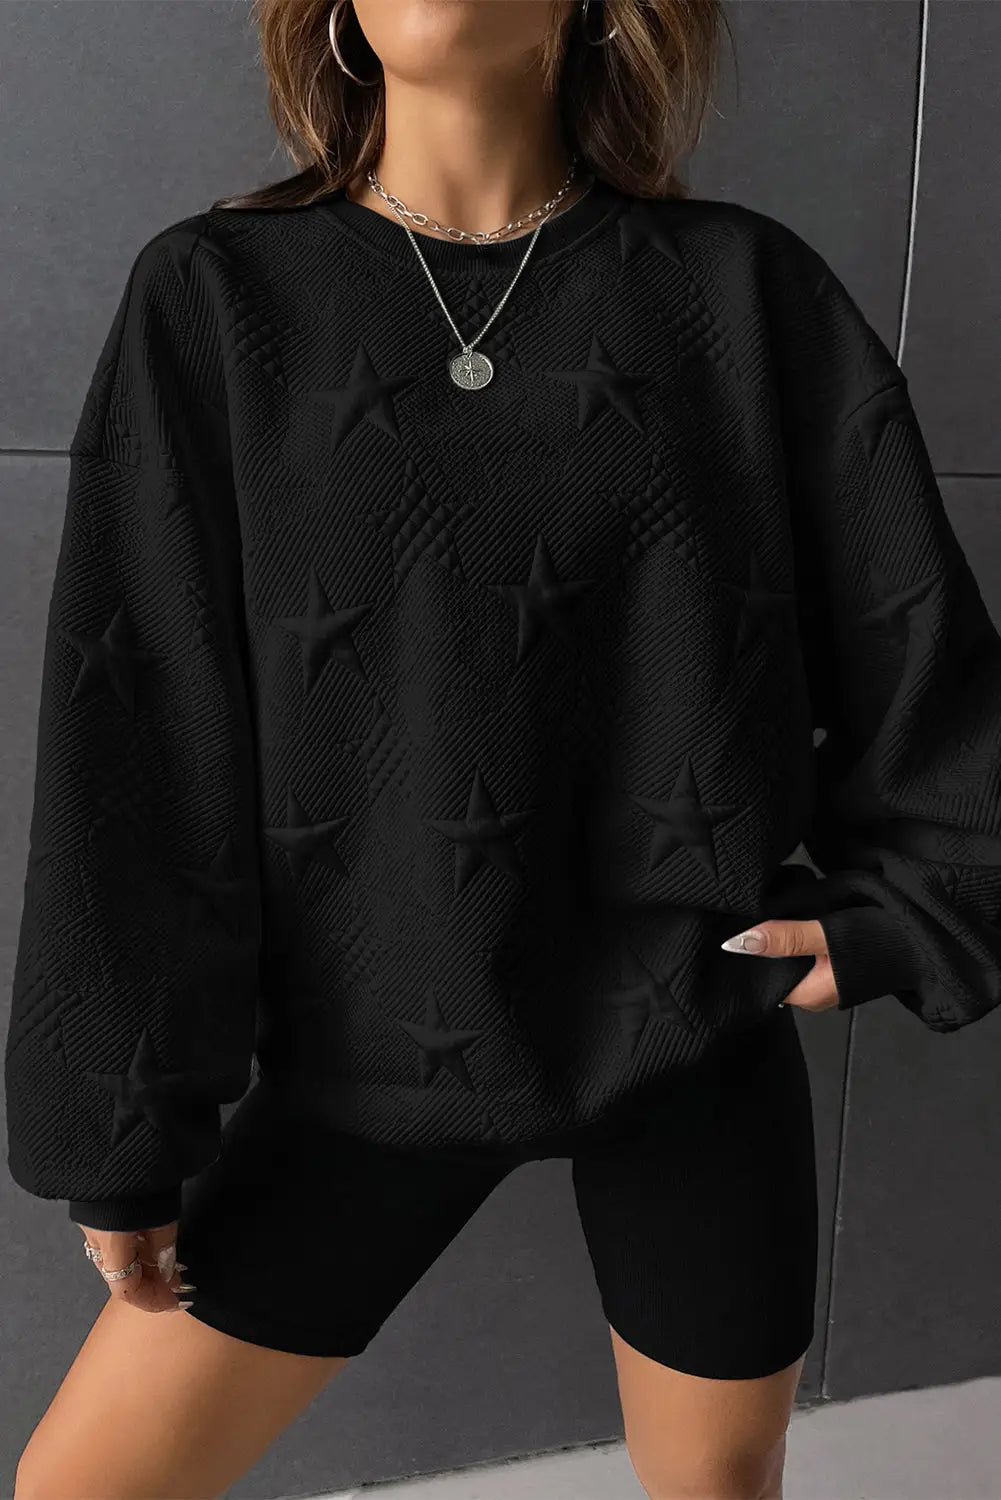 Peach blossom star embossed textured drop shoulder sweatshirt - black / l / 95% polyester + 5% elastane - sweatshirts &